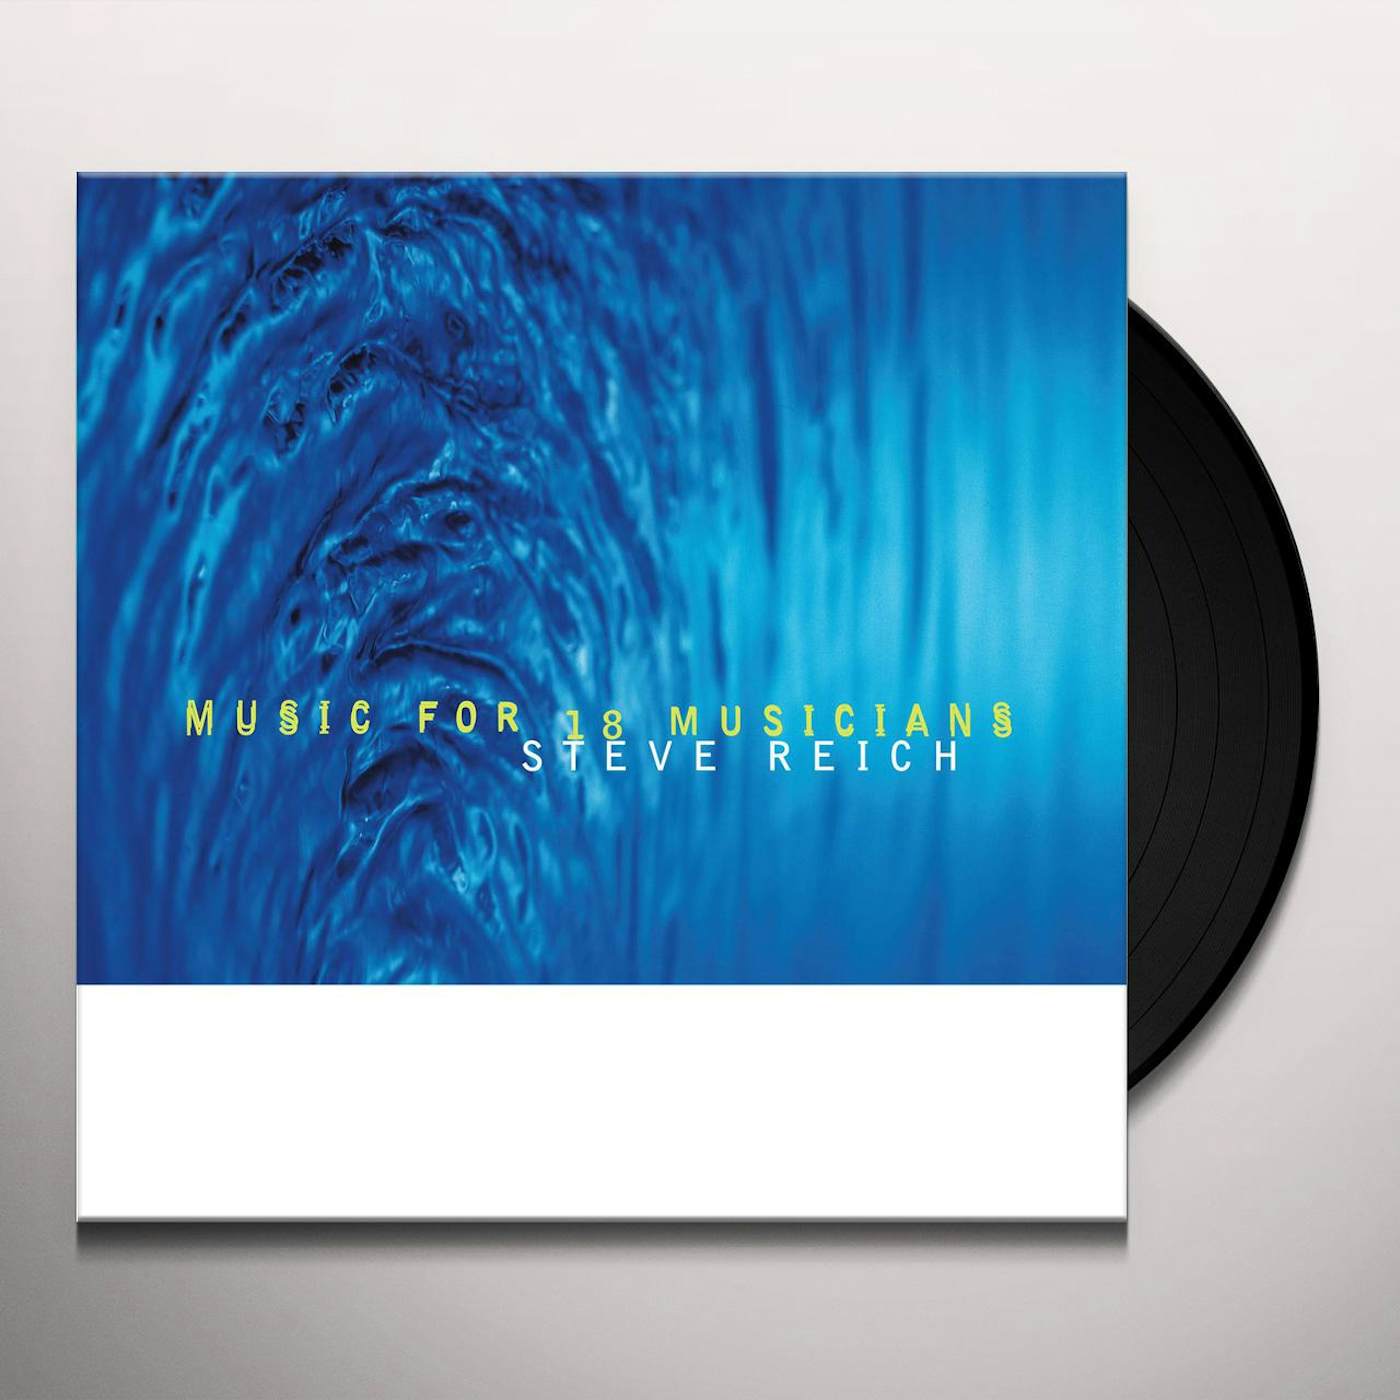 Steve Reich Music For 18 Musicians Vinyl Record